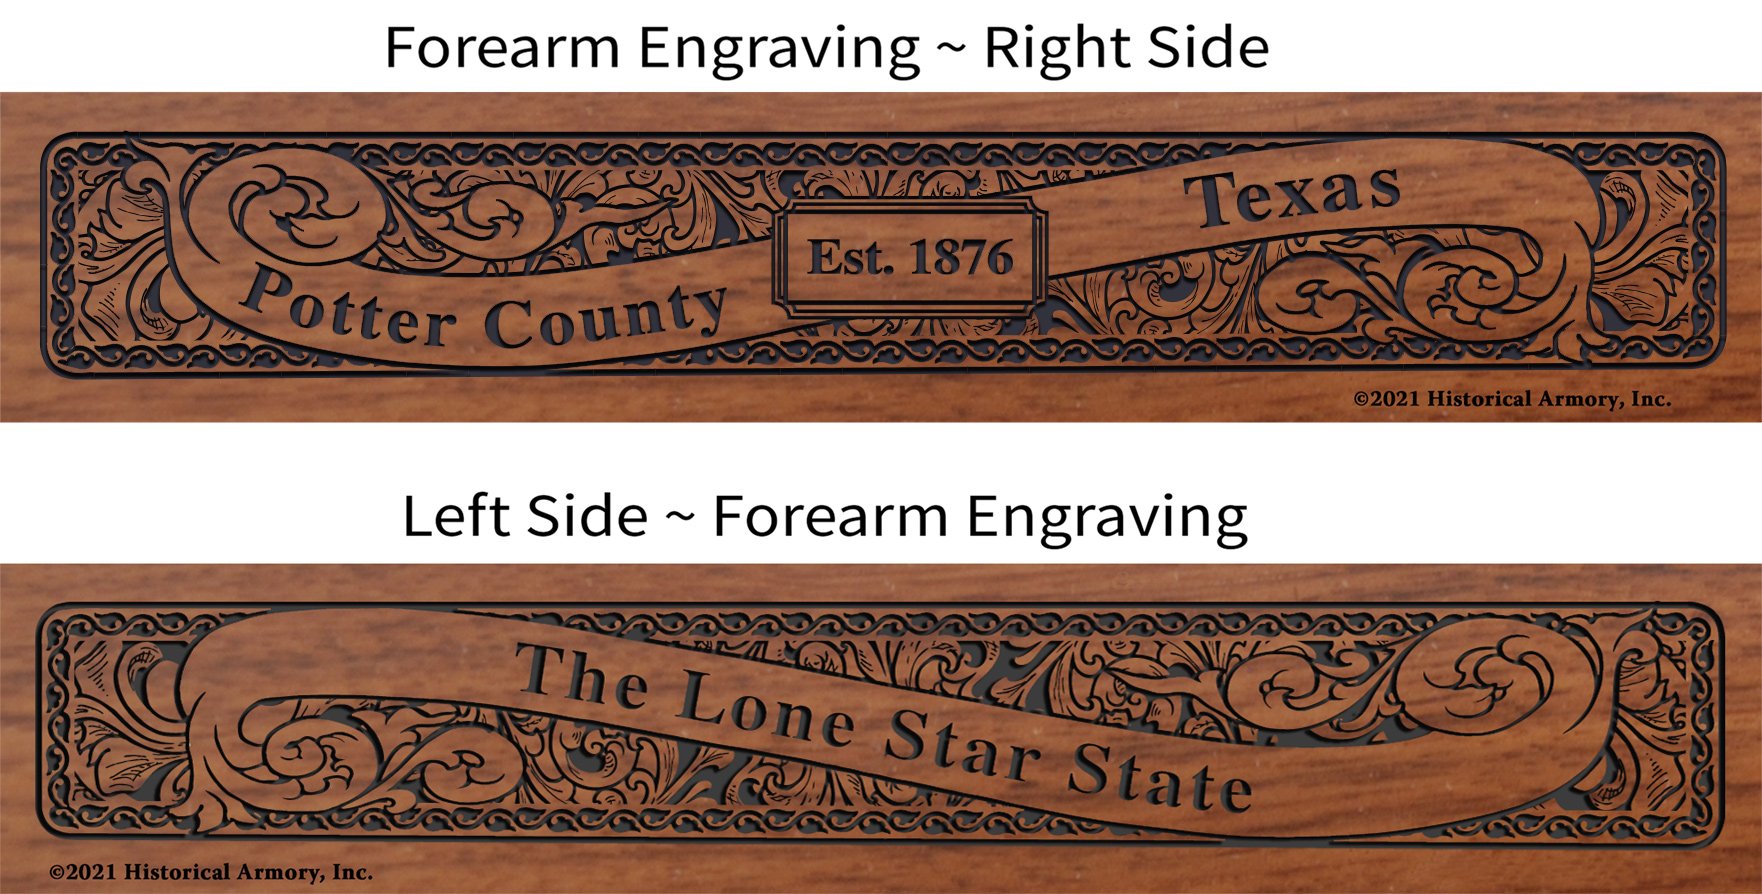 Potter County Texas Establishment and Motto History Engraved Rifle Forearm